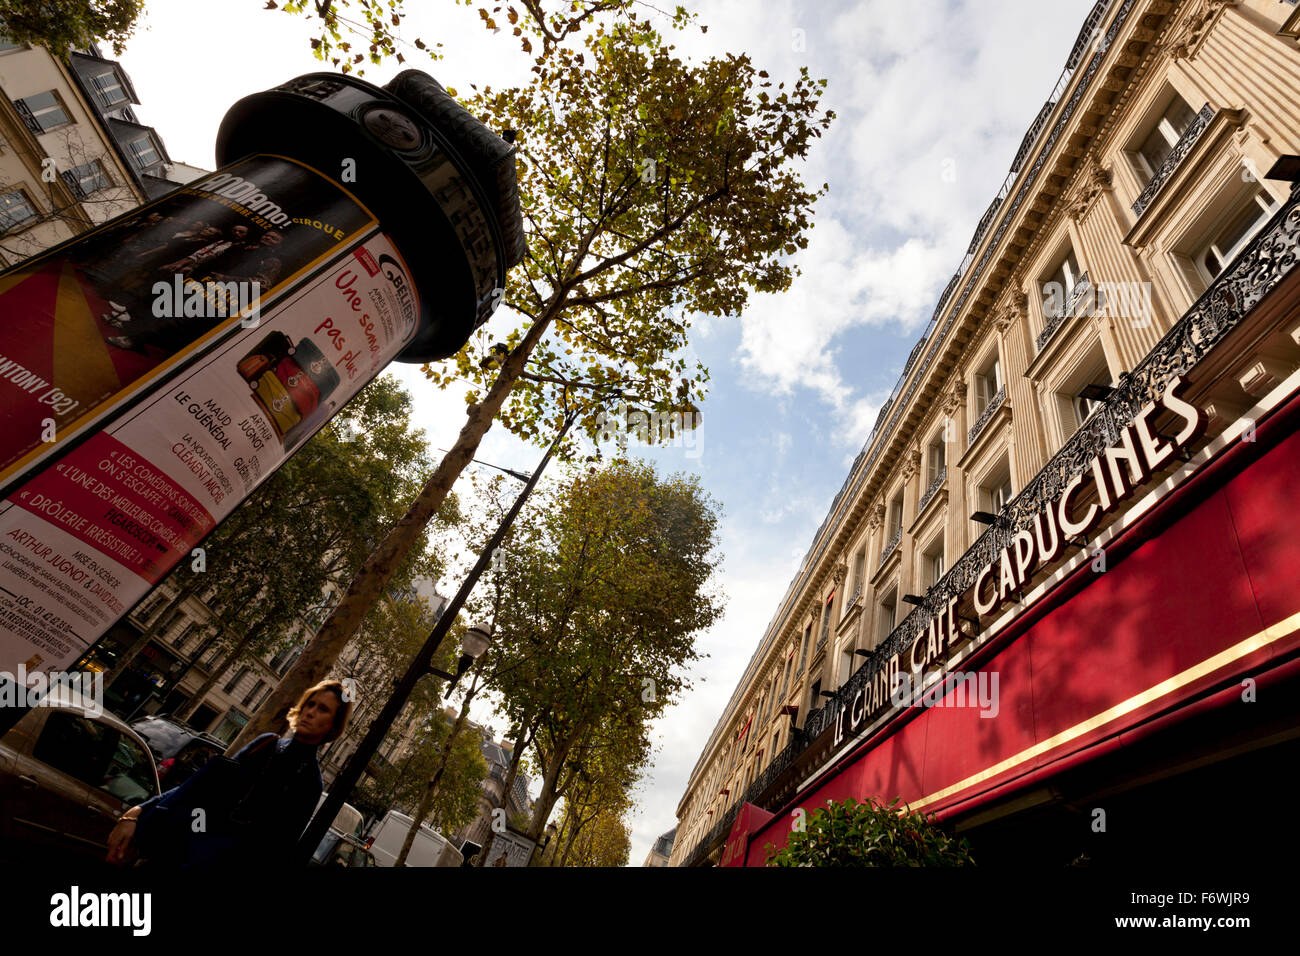 The Grand Cafe Capucines on Boulevard des Capucines, Paris, France Stock Photo